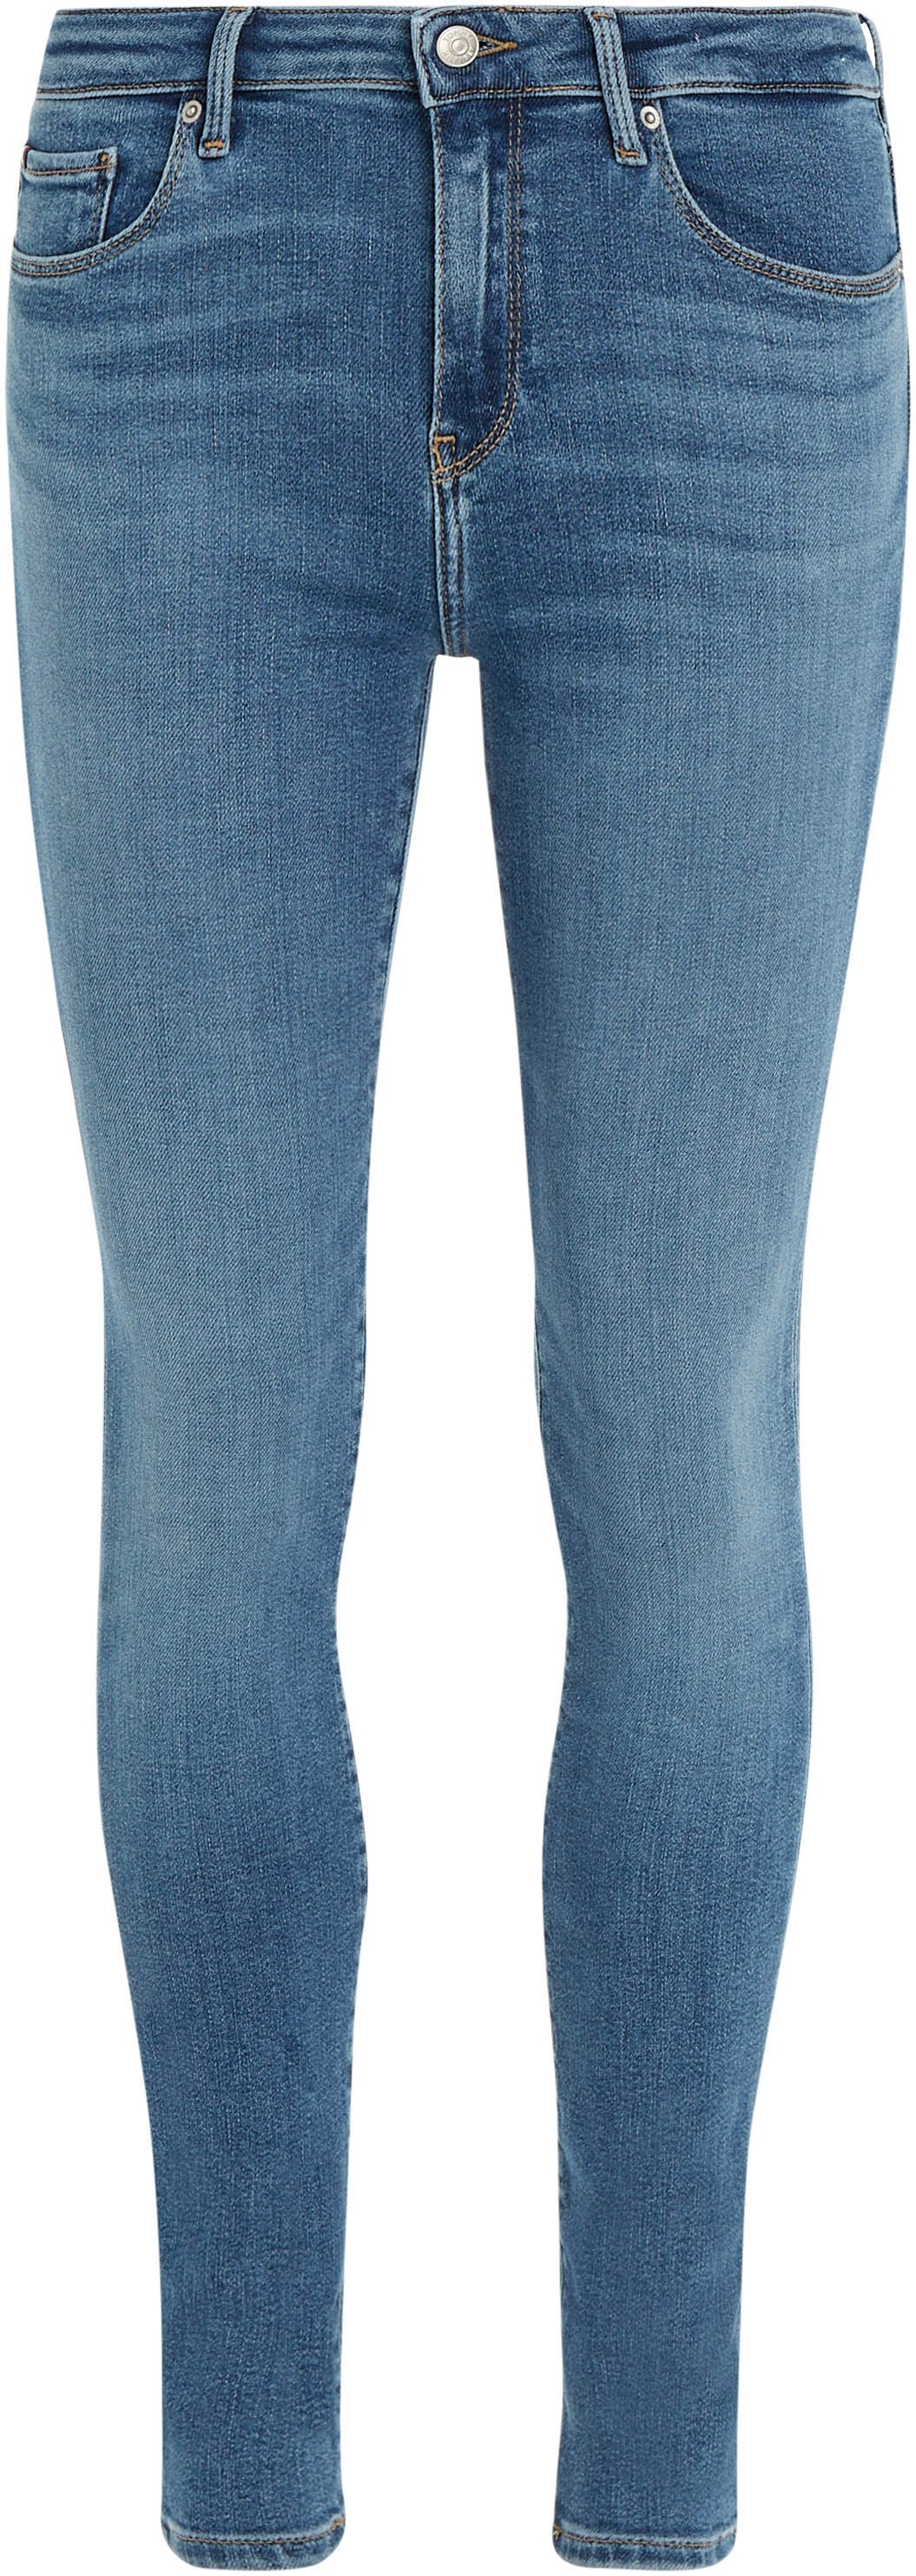 Tommy Hilfiger FLX kaufen mit TH HARLEM | Logoprägung Curve MEL«, BAUR »CRV für Skinny-fit-Jeans HW SKNNY